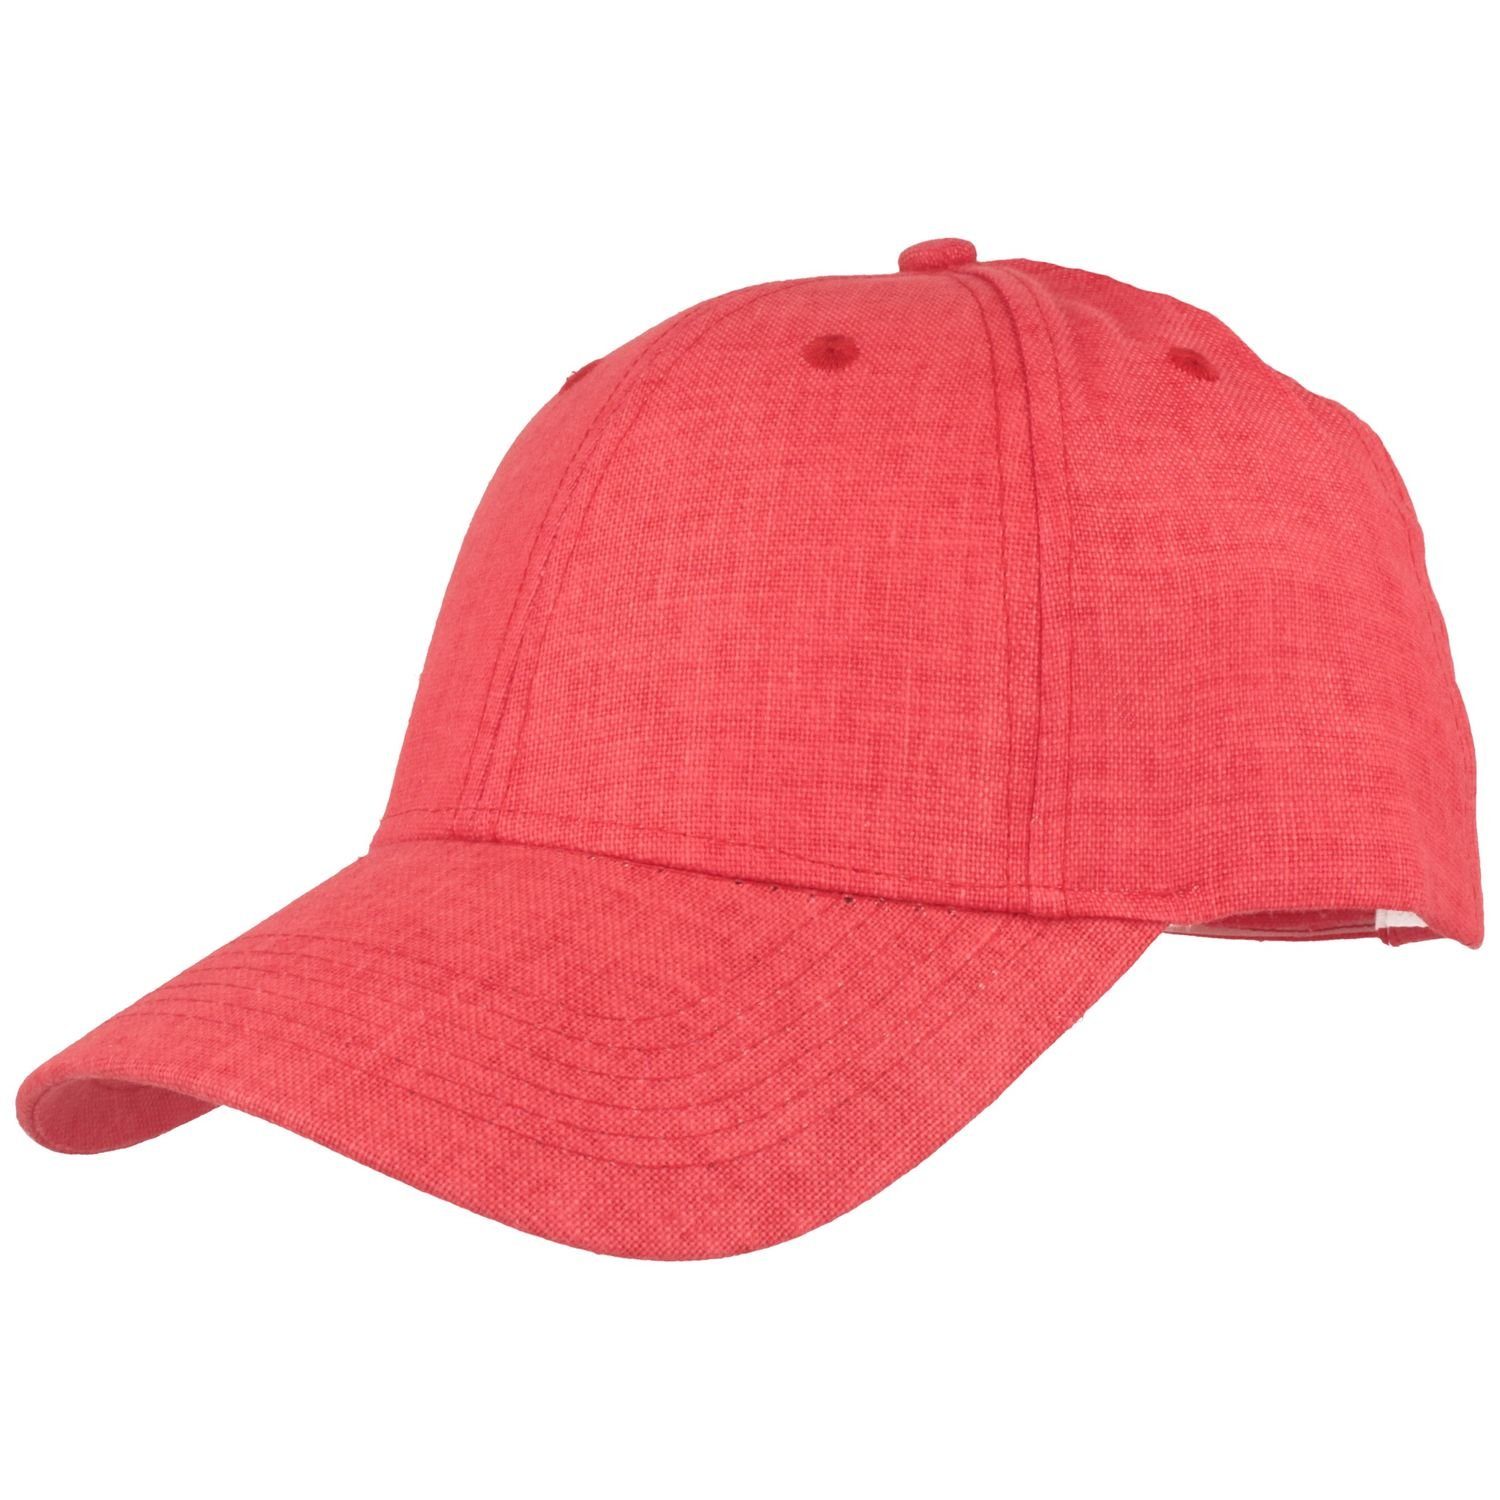 Leinen Baseball Damen Baseball-Cap Cap 301-Signalrot Baumwolle aus Breiter und